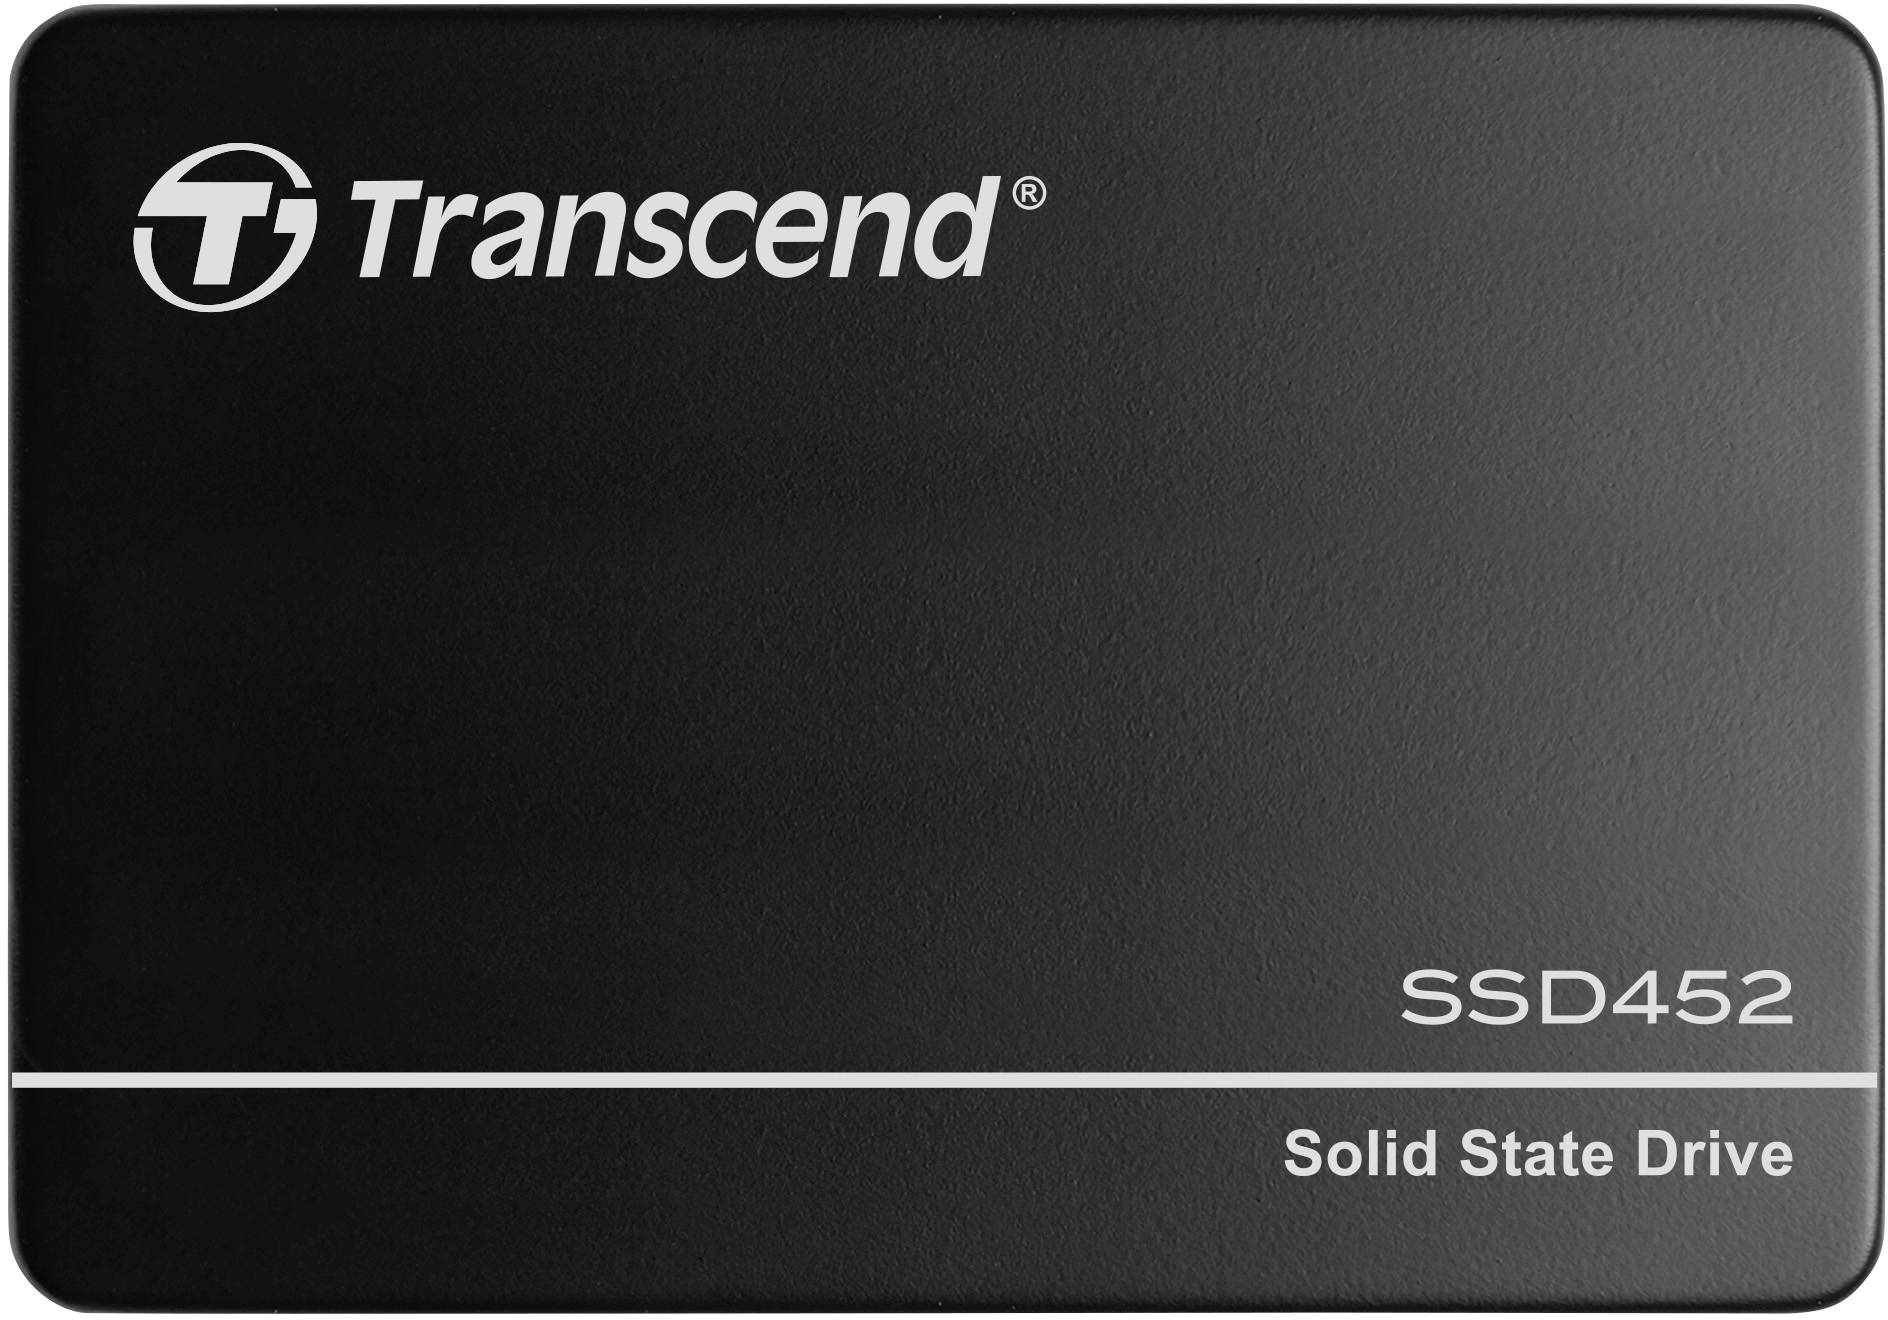 TRANSCEND SSD452K-I 1TB